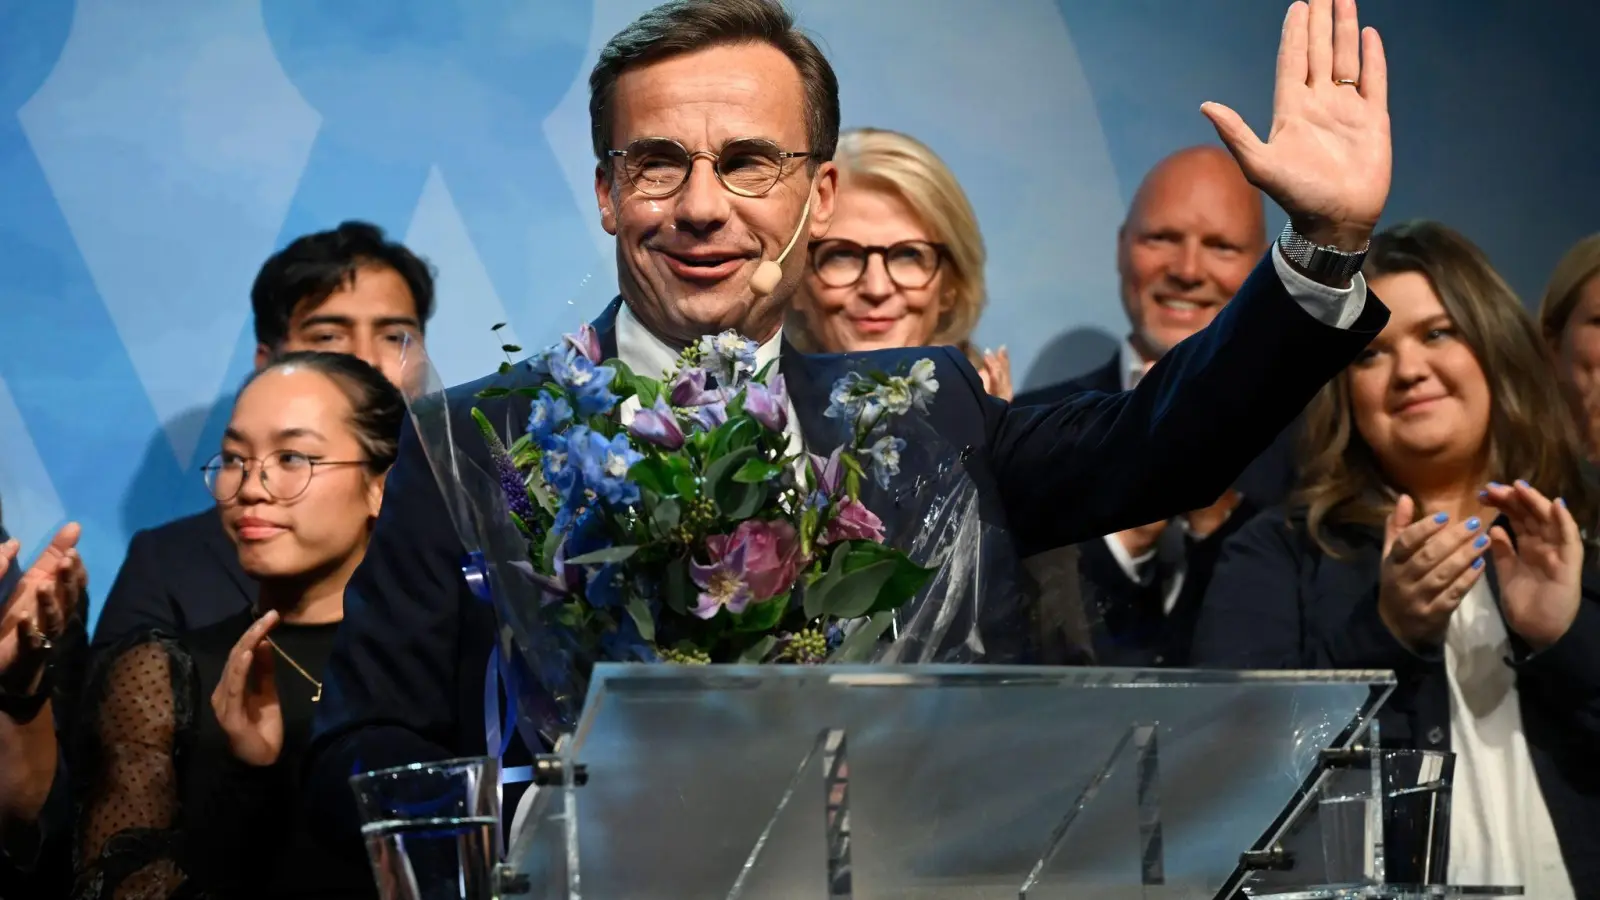 Der konservative Spitzenkandidat Ulf Kristersson bei einer Wahlparty in Stockholm. (Foto: Fredrik Sandberg/TT News Agency via AP/dpa)